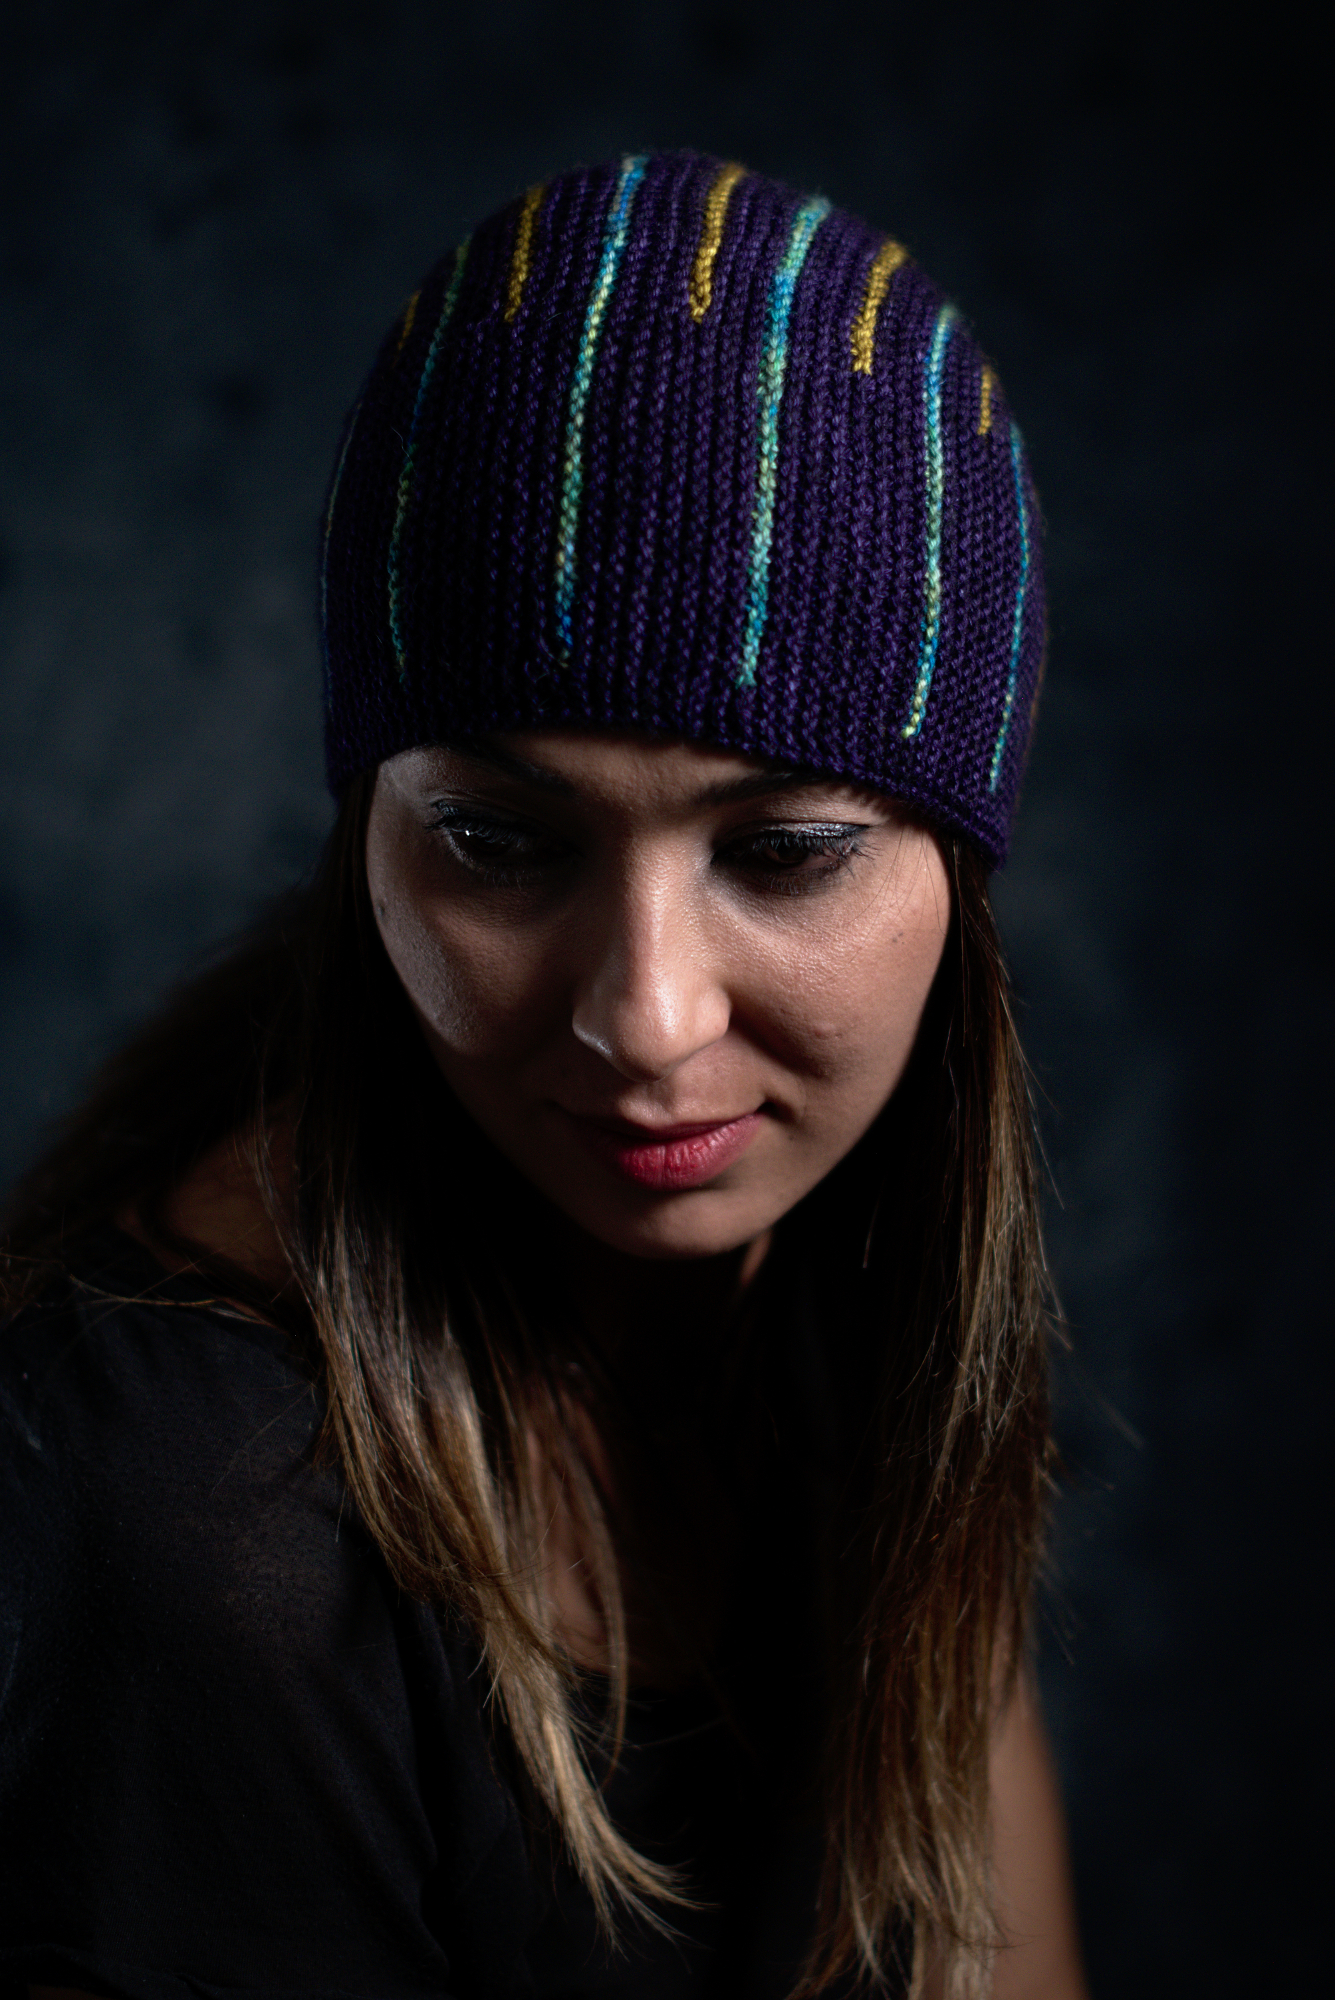 Duality sideways knit short row striped hat knitting pattern